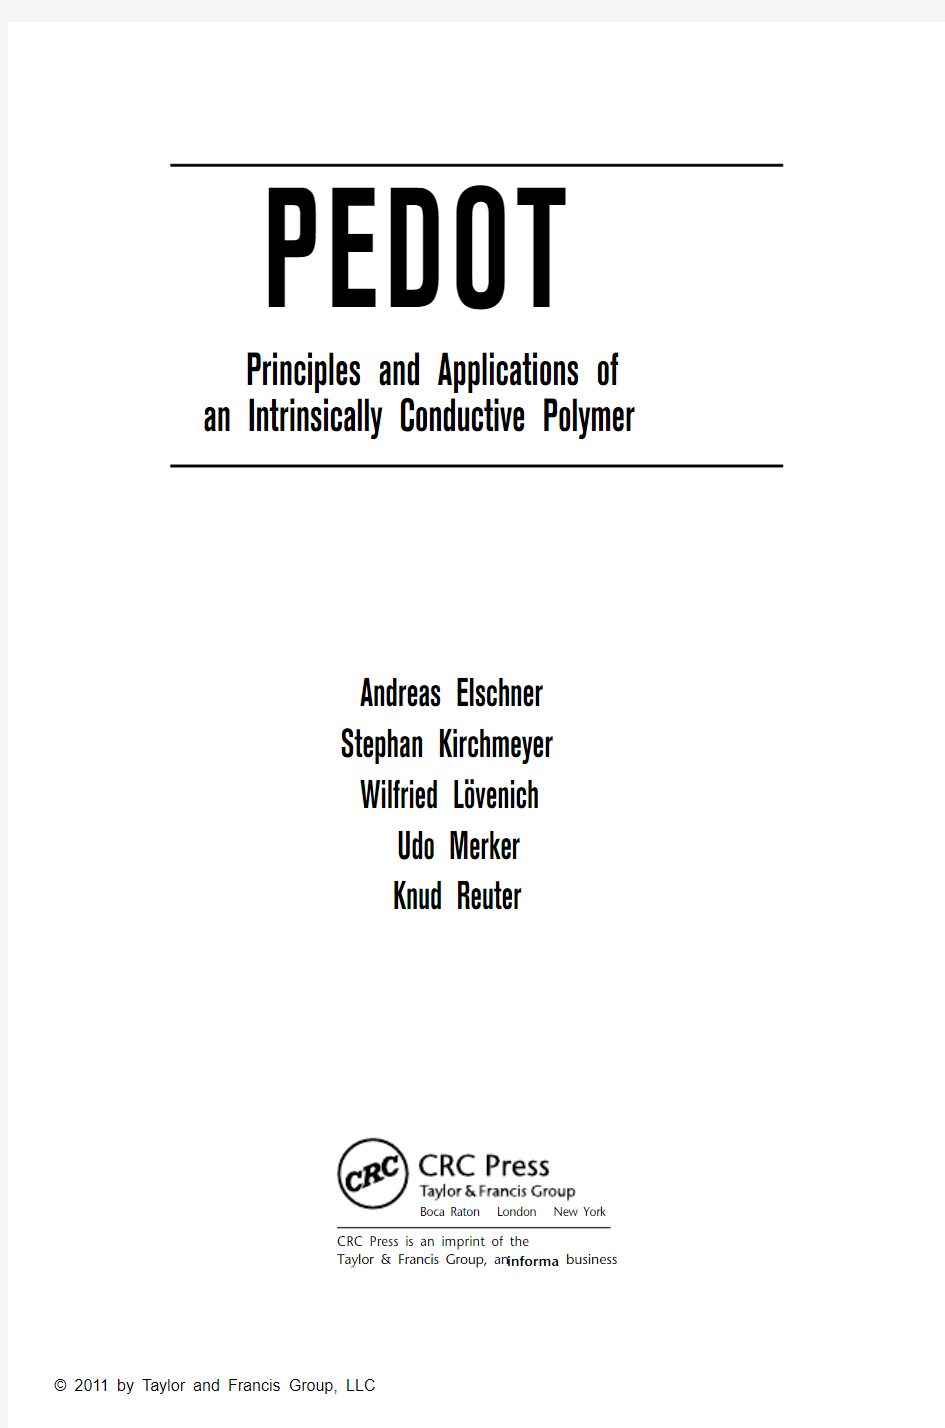 PEDOT as a Conductive Polymer-Principles and Applications(1)